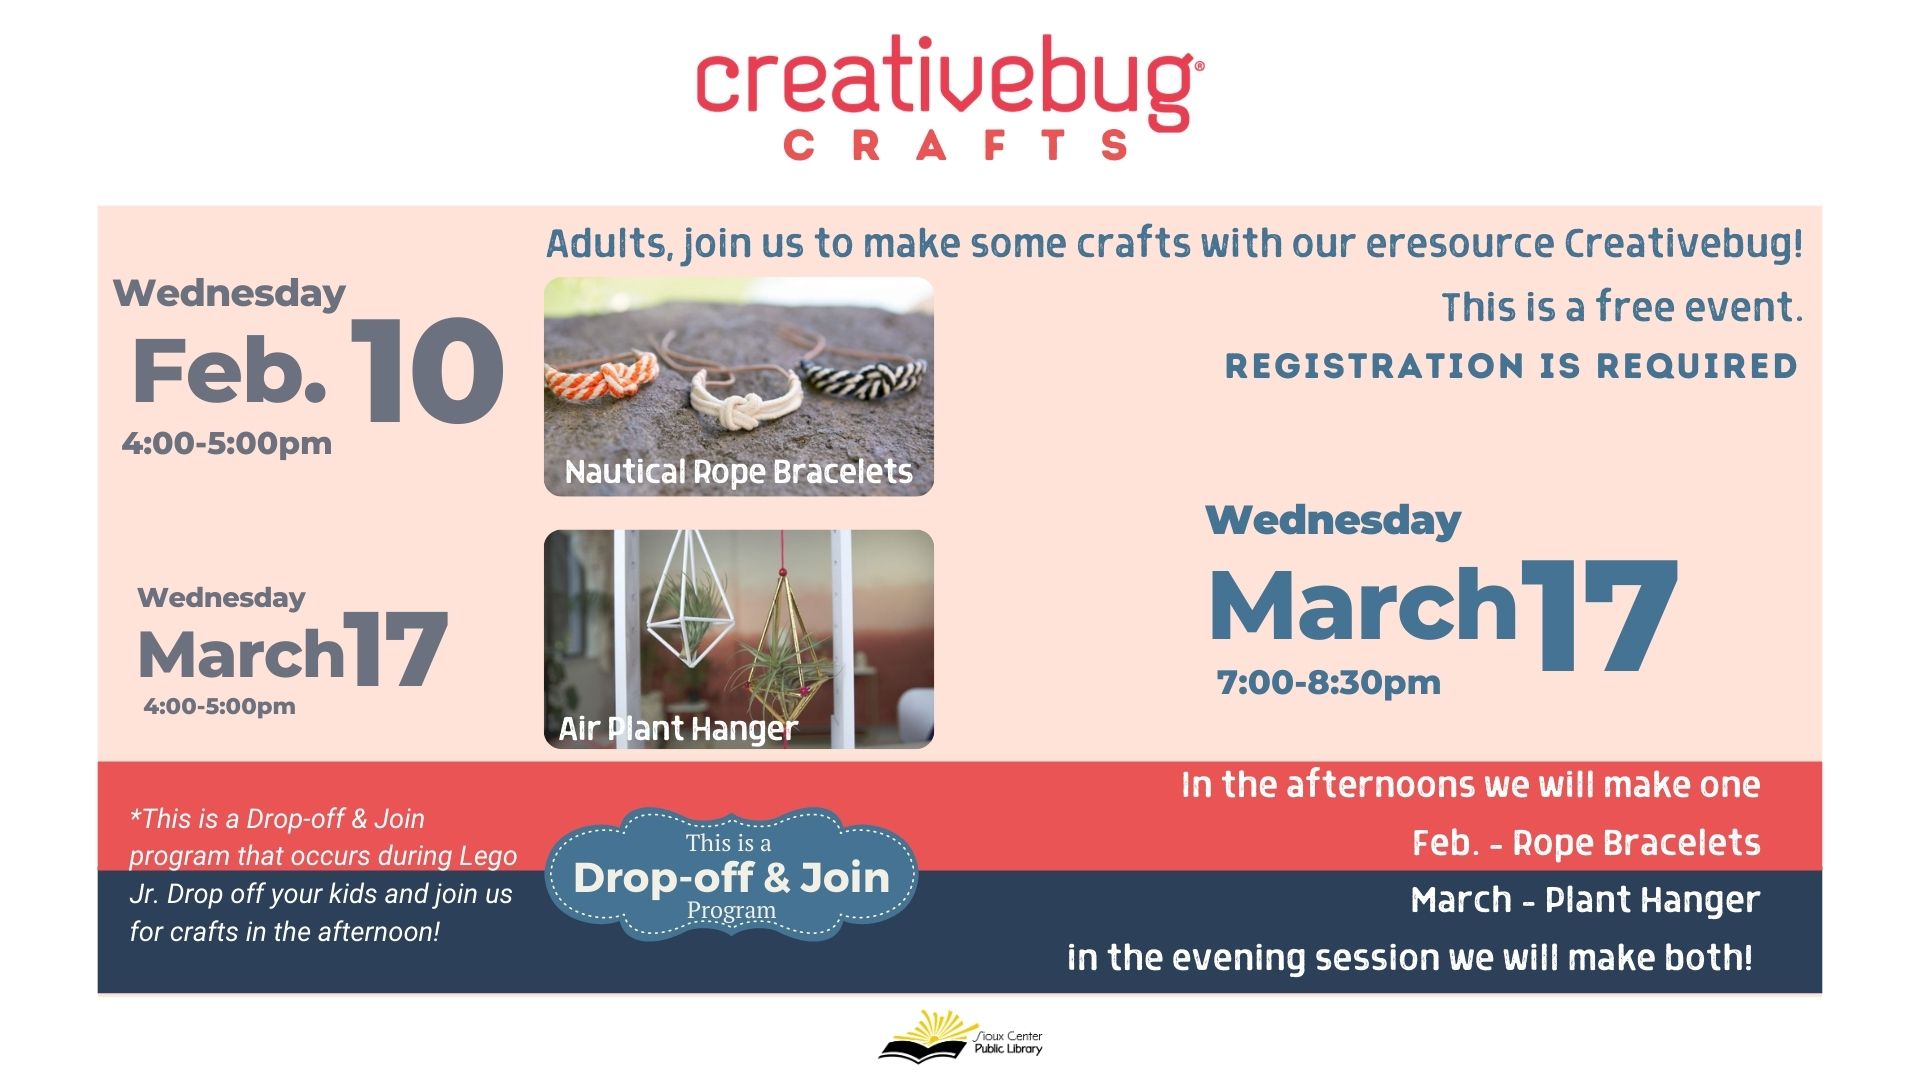 Creativebug Crafts